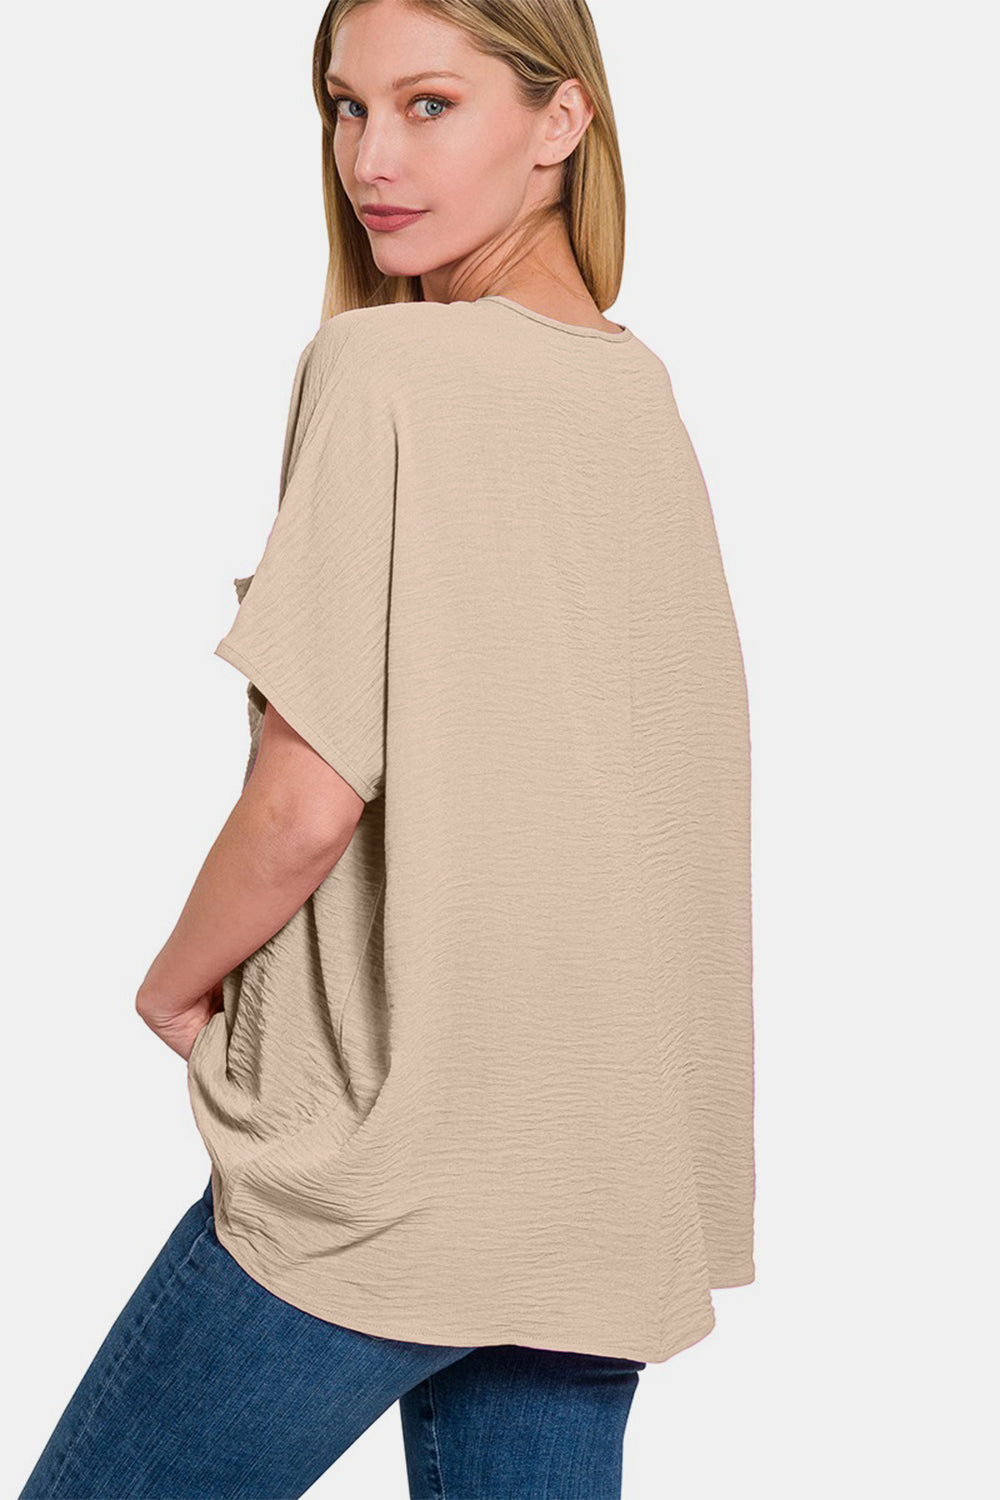 Zenana Full Size Texture V-Neck Short Sleeve Top  | KIKI COUTURE